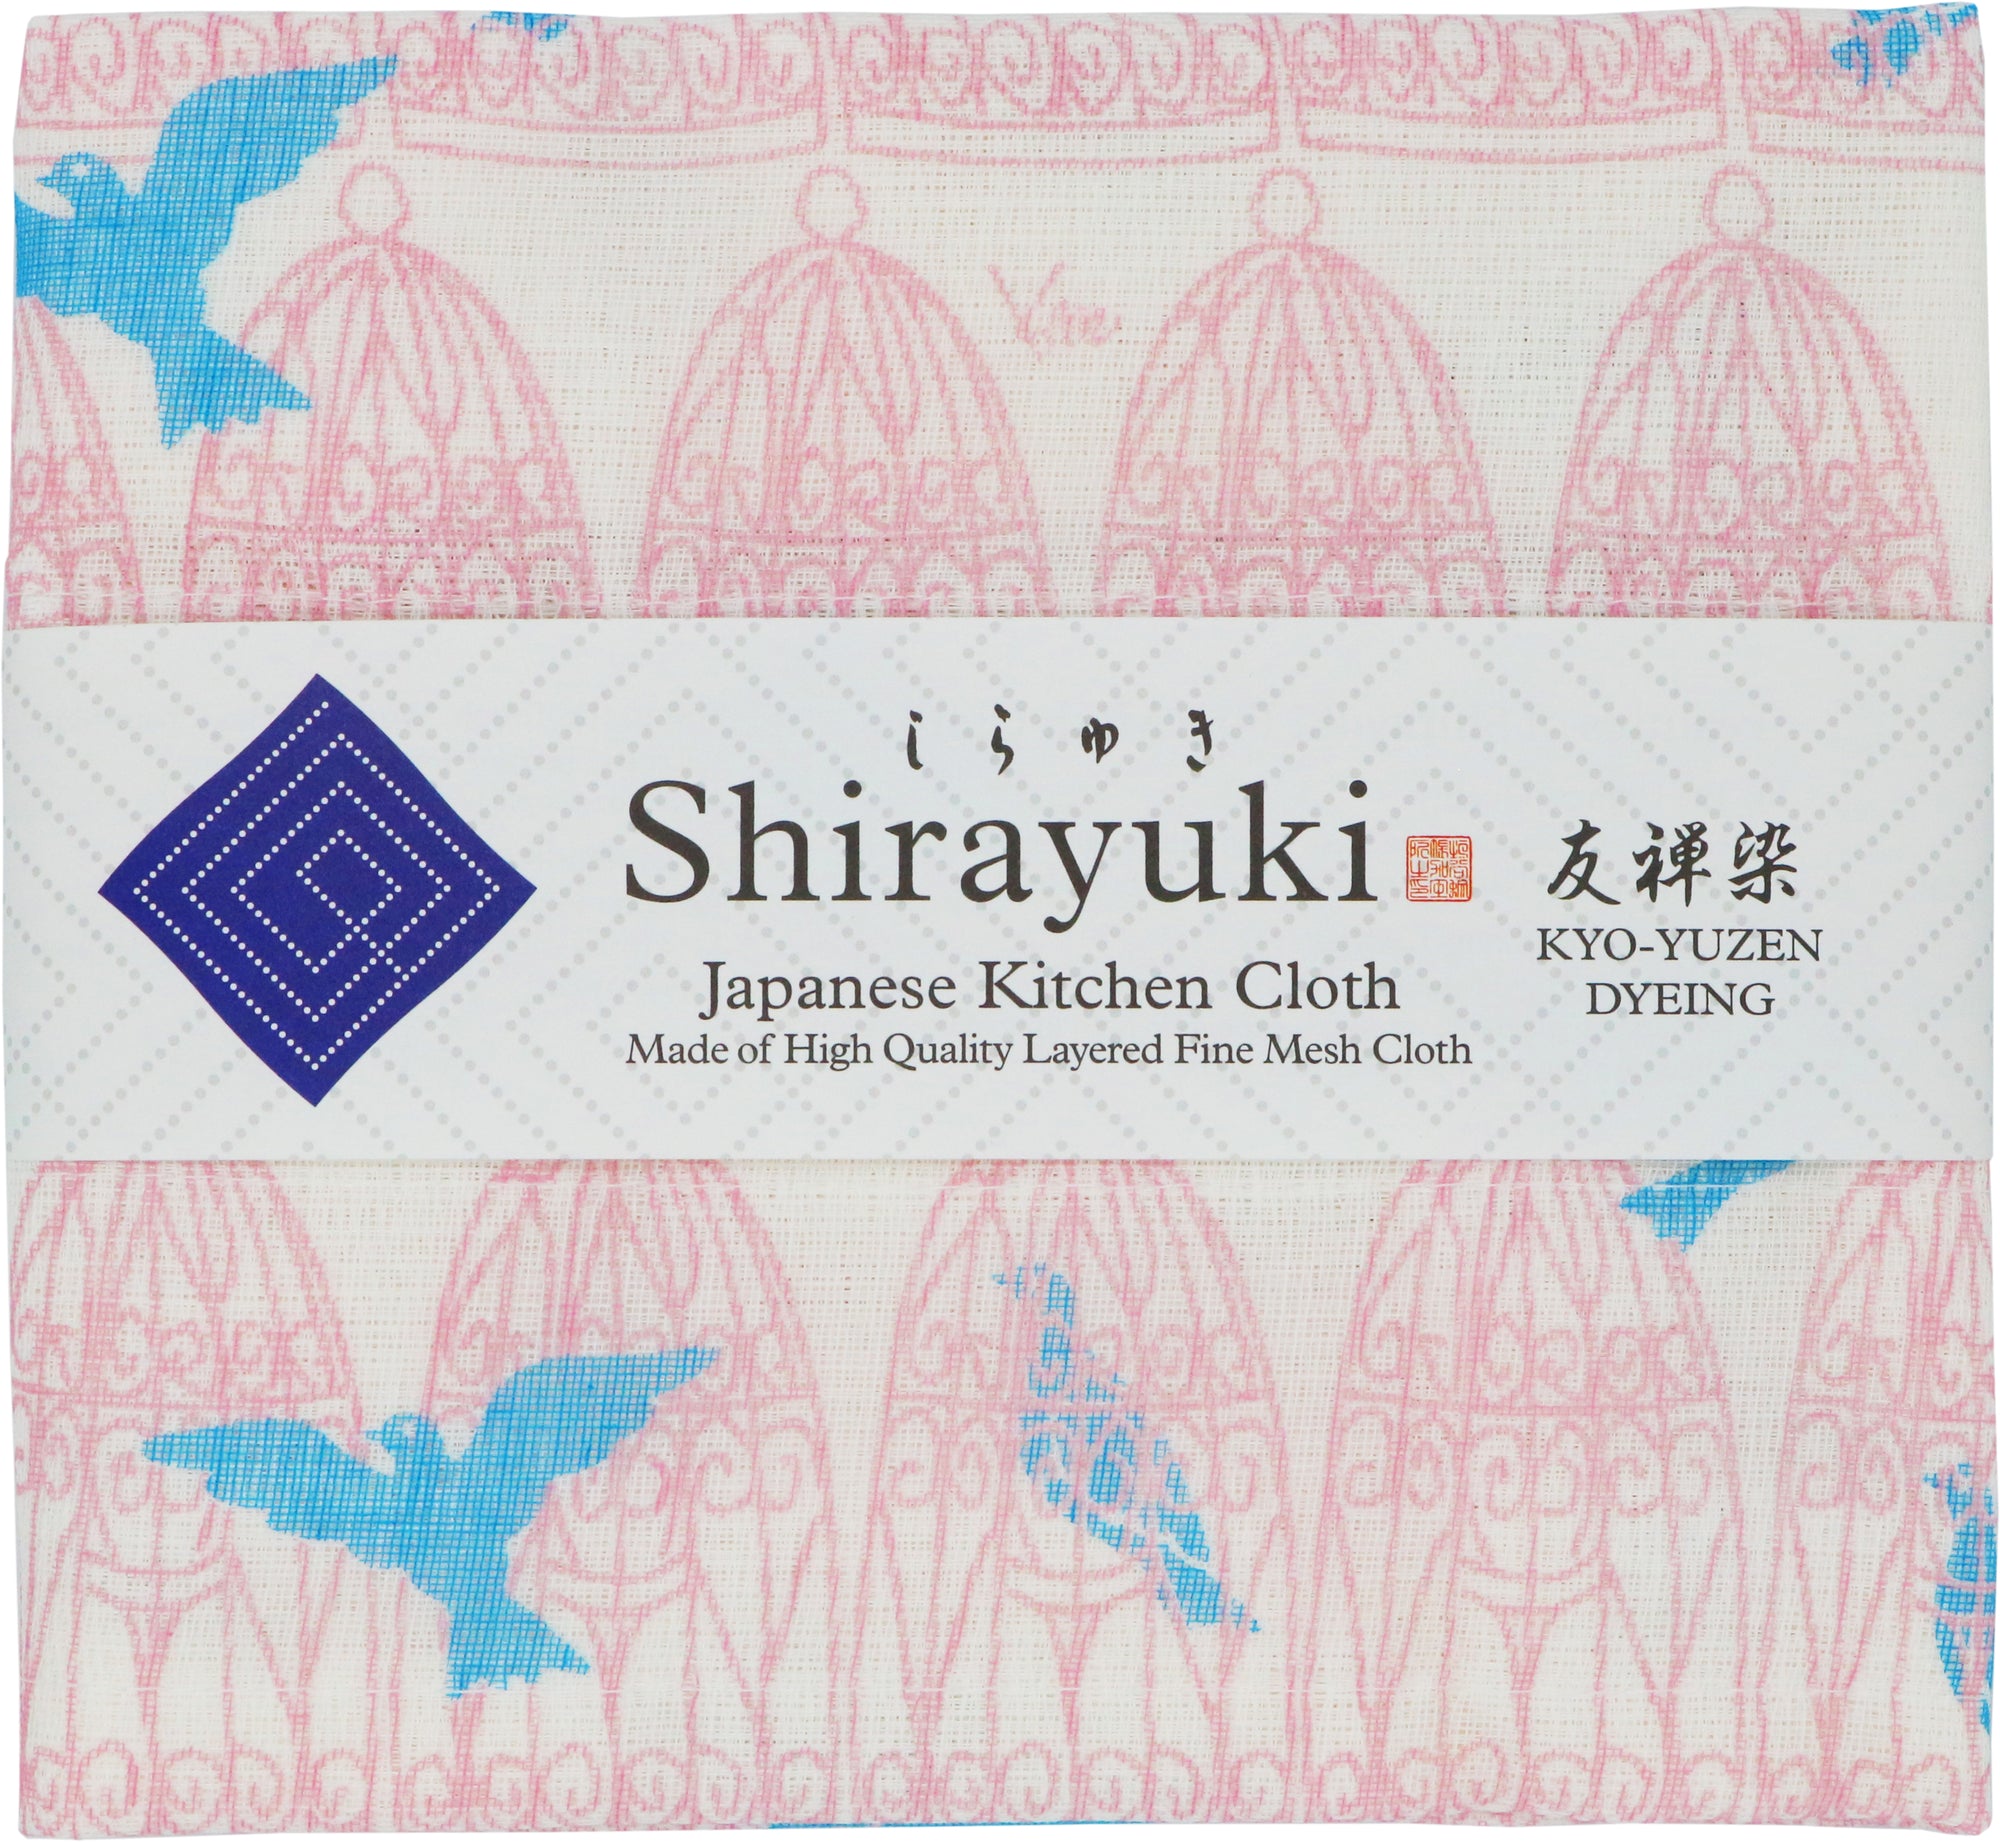 Shirayuki Japanese Kitchen Cloth. Made of Fine Layered Mesh Cloth. Dish Wipe, Table Wipe. Made in Japan (Pink, Blue Birds)